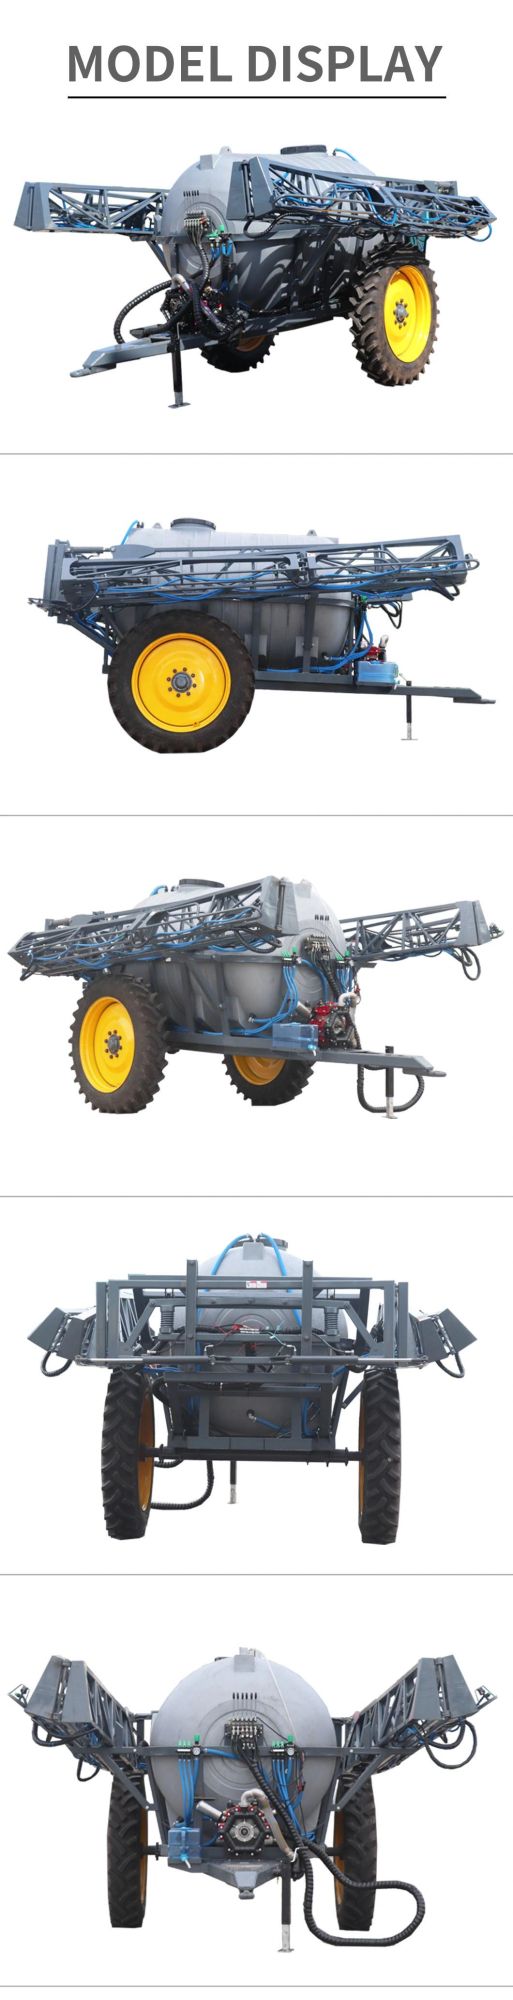 Agricultural Farm Garden Tool Tractor Drawn Mounted Power Boom Sprayer